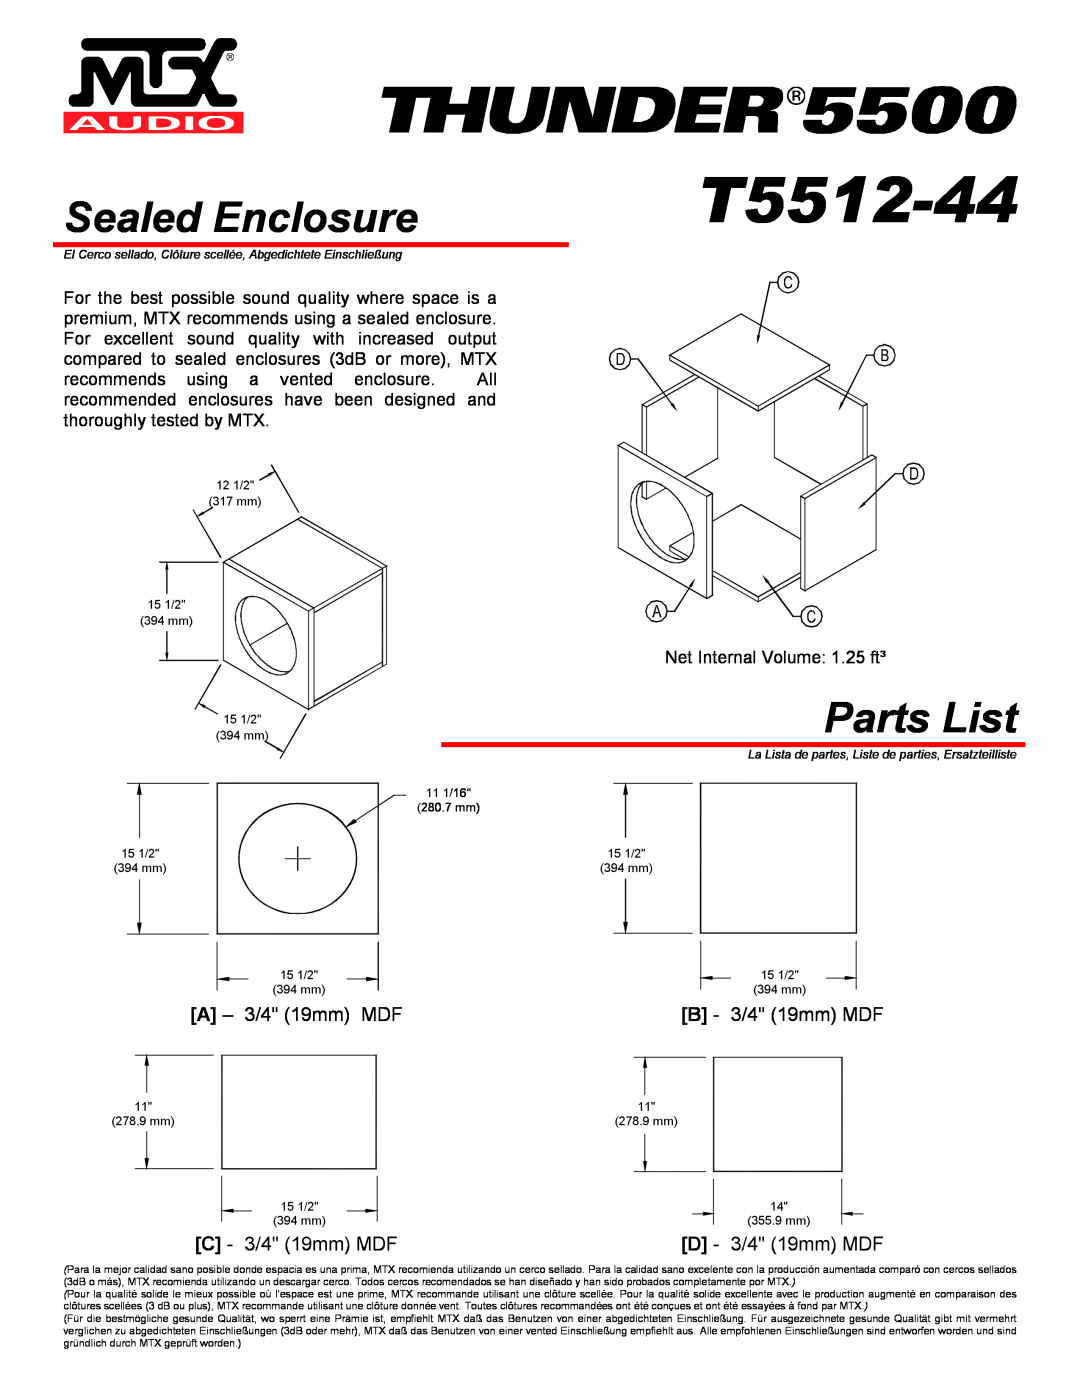 MTX Audio T5512-44 Sealed Enclosure, Parts List, A - 3/4 19mm MDF, B - 3/4 19mm MDF, C - 3/4 19mm MDF, D - 3/4 19mm MDF 